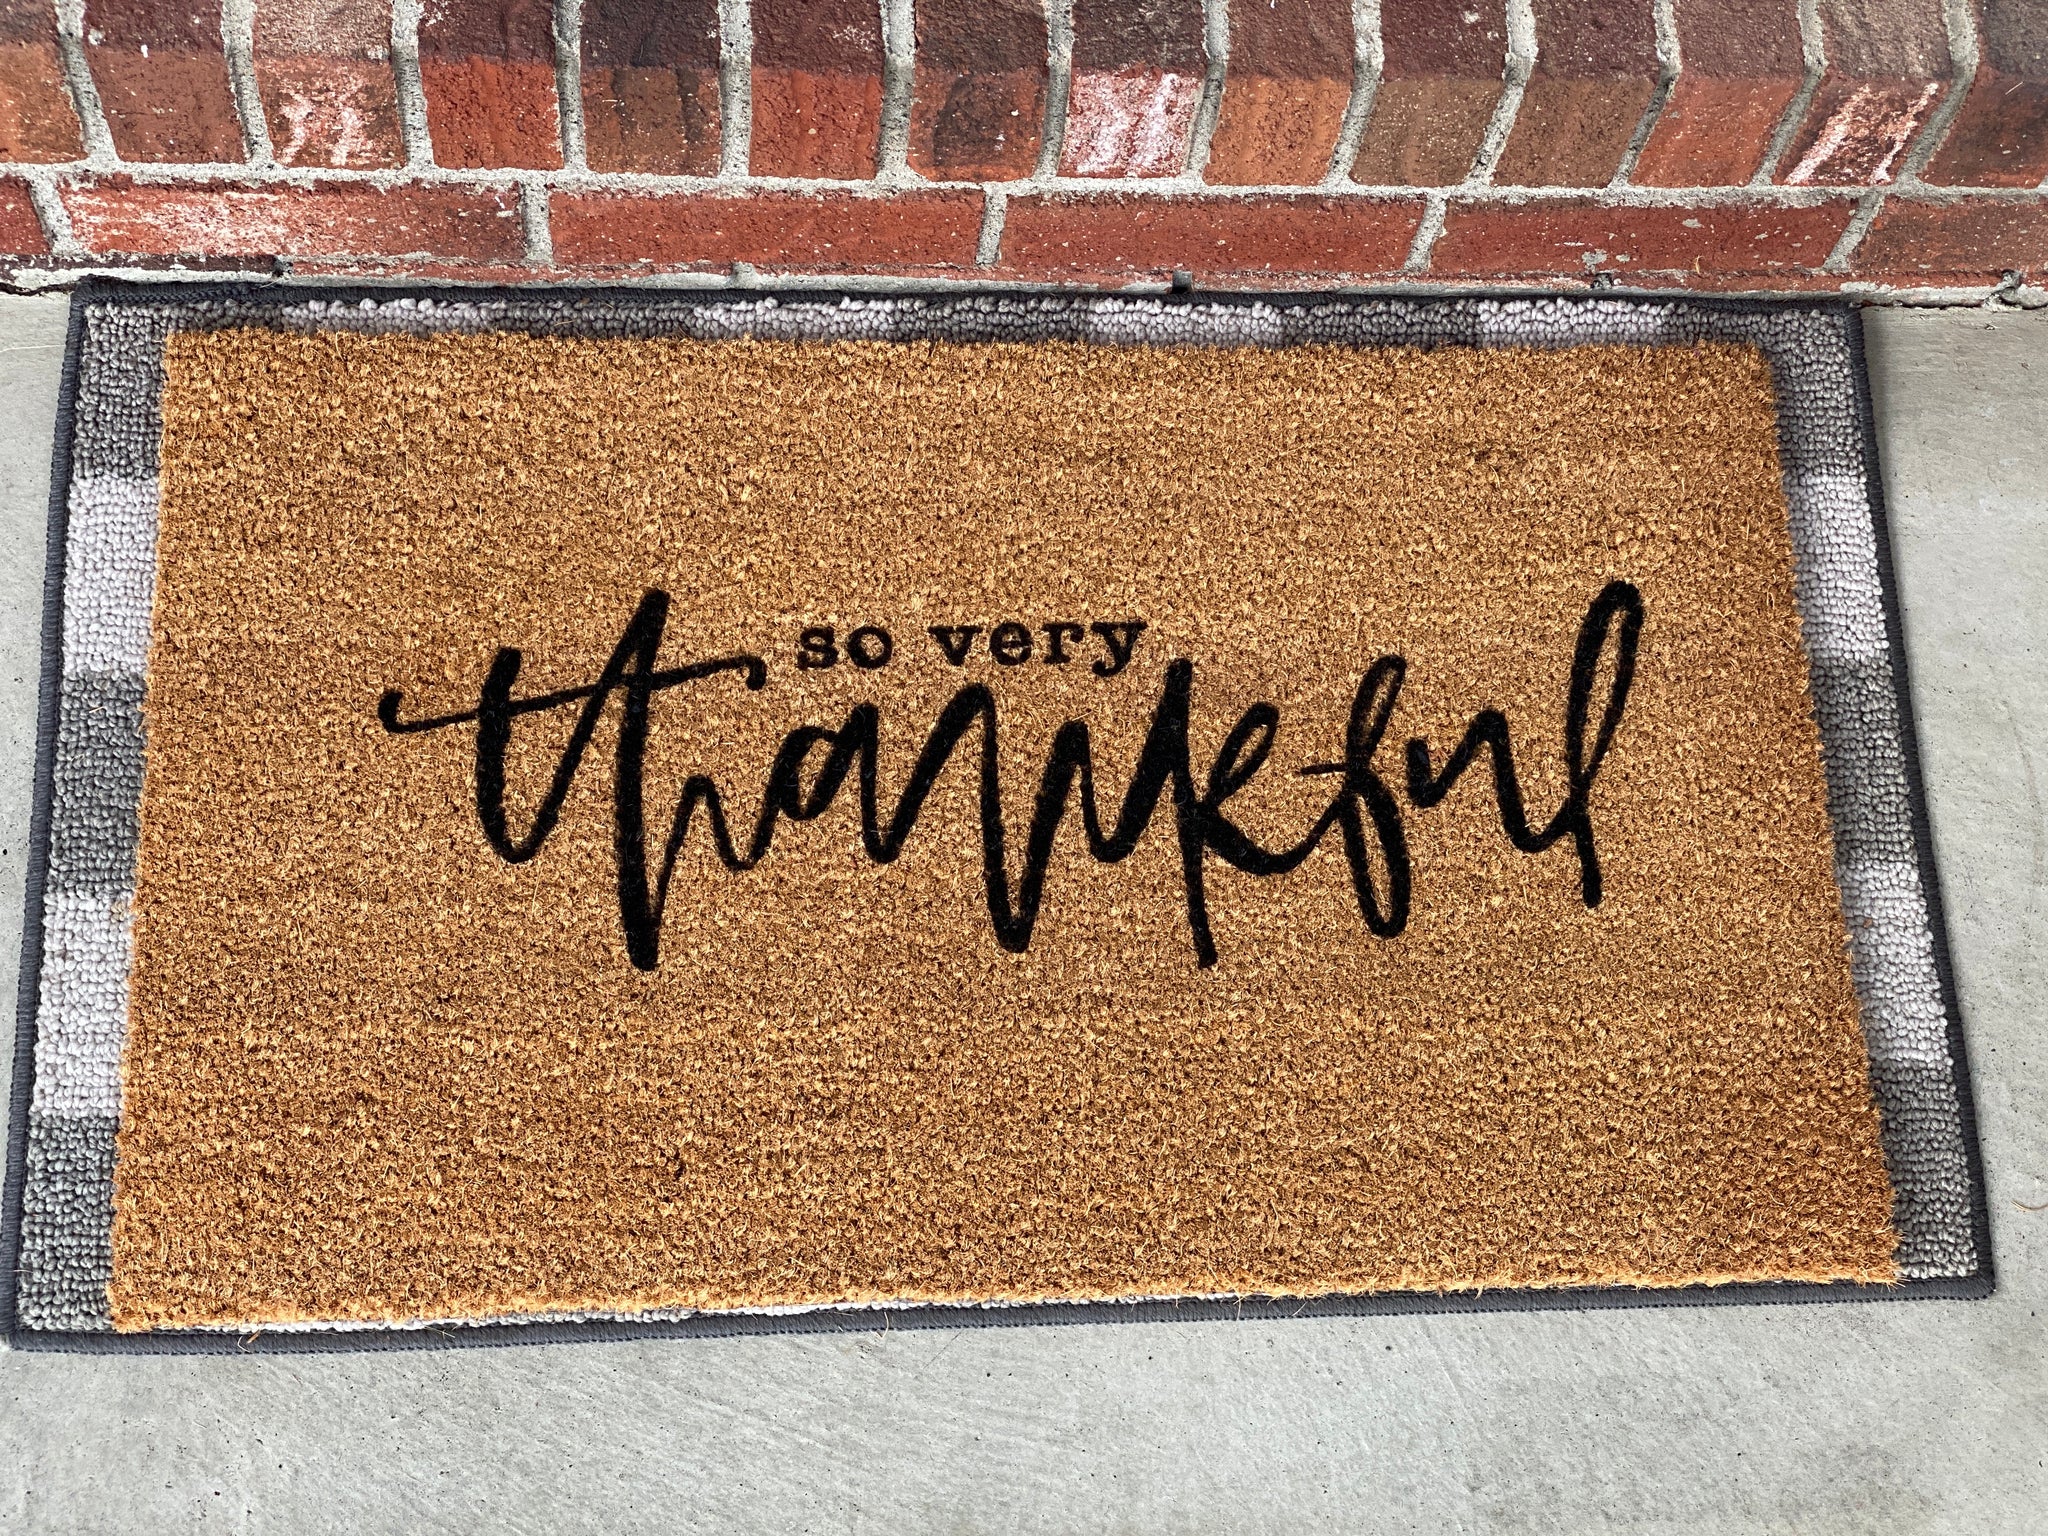 So Very Thankful Doormat